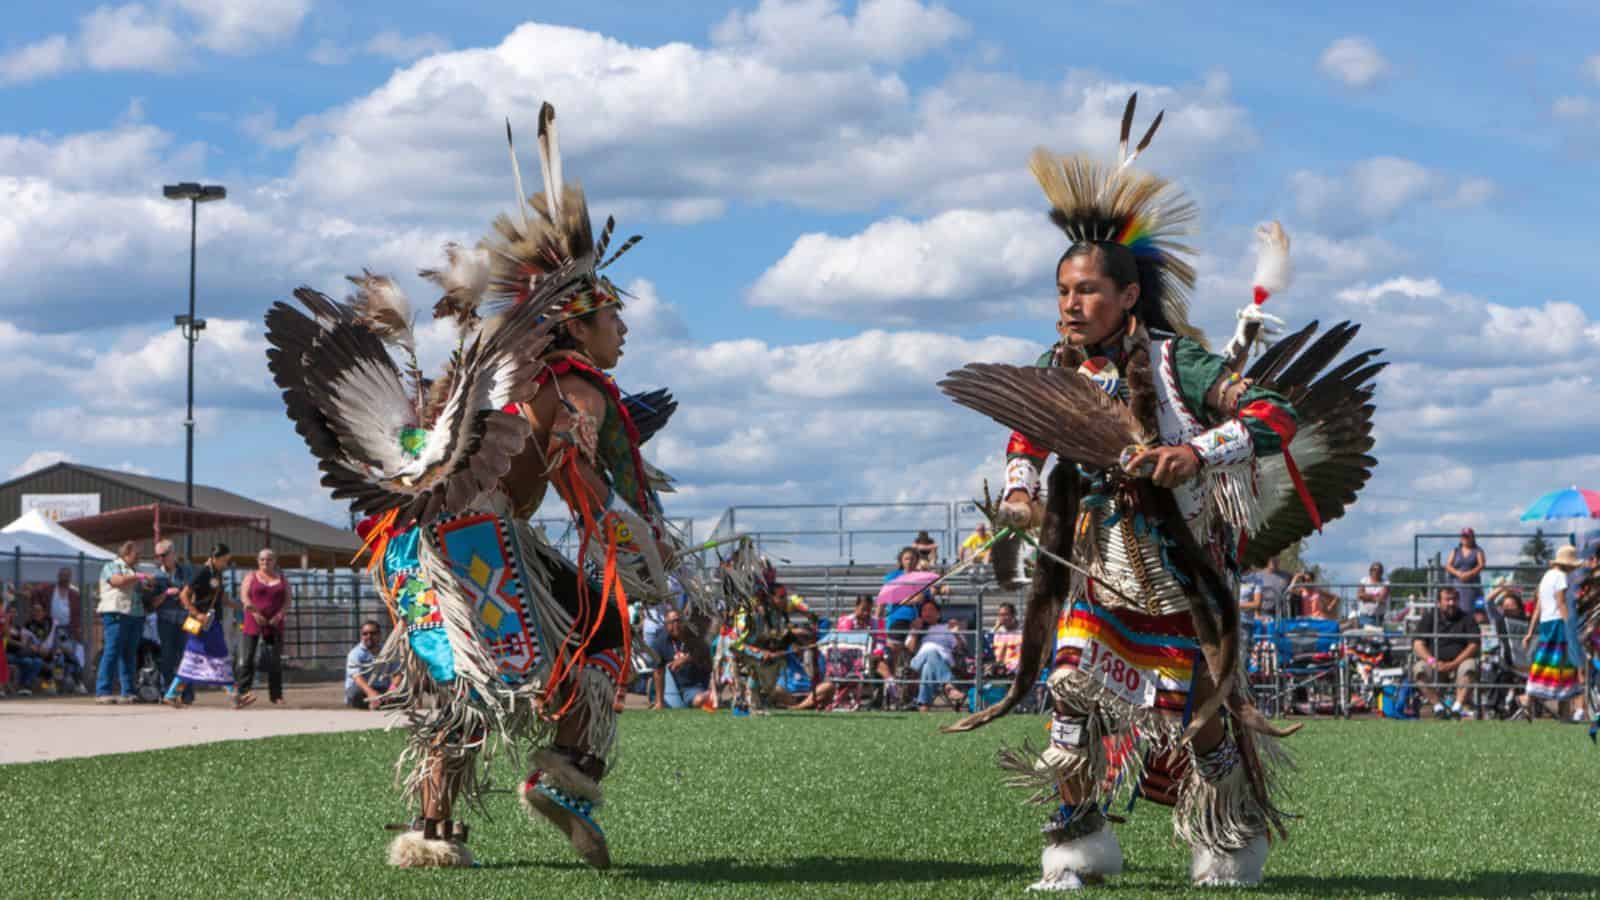 Opposing Native Americans at powwow dance